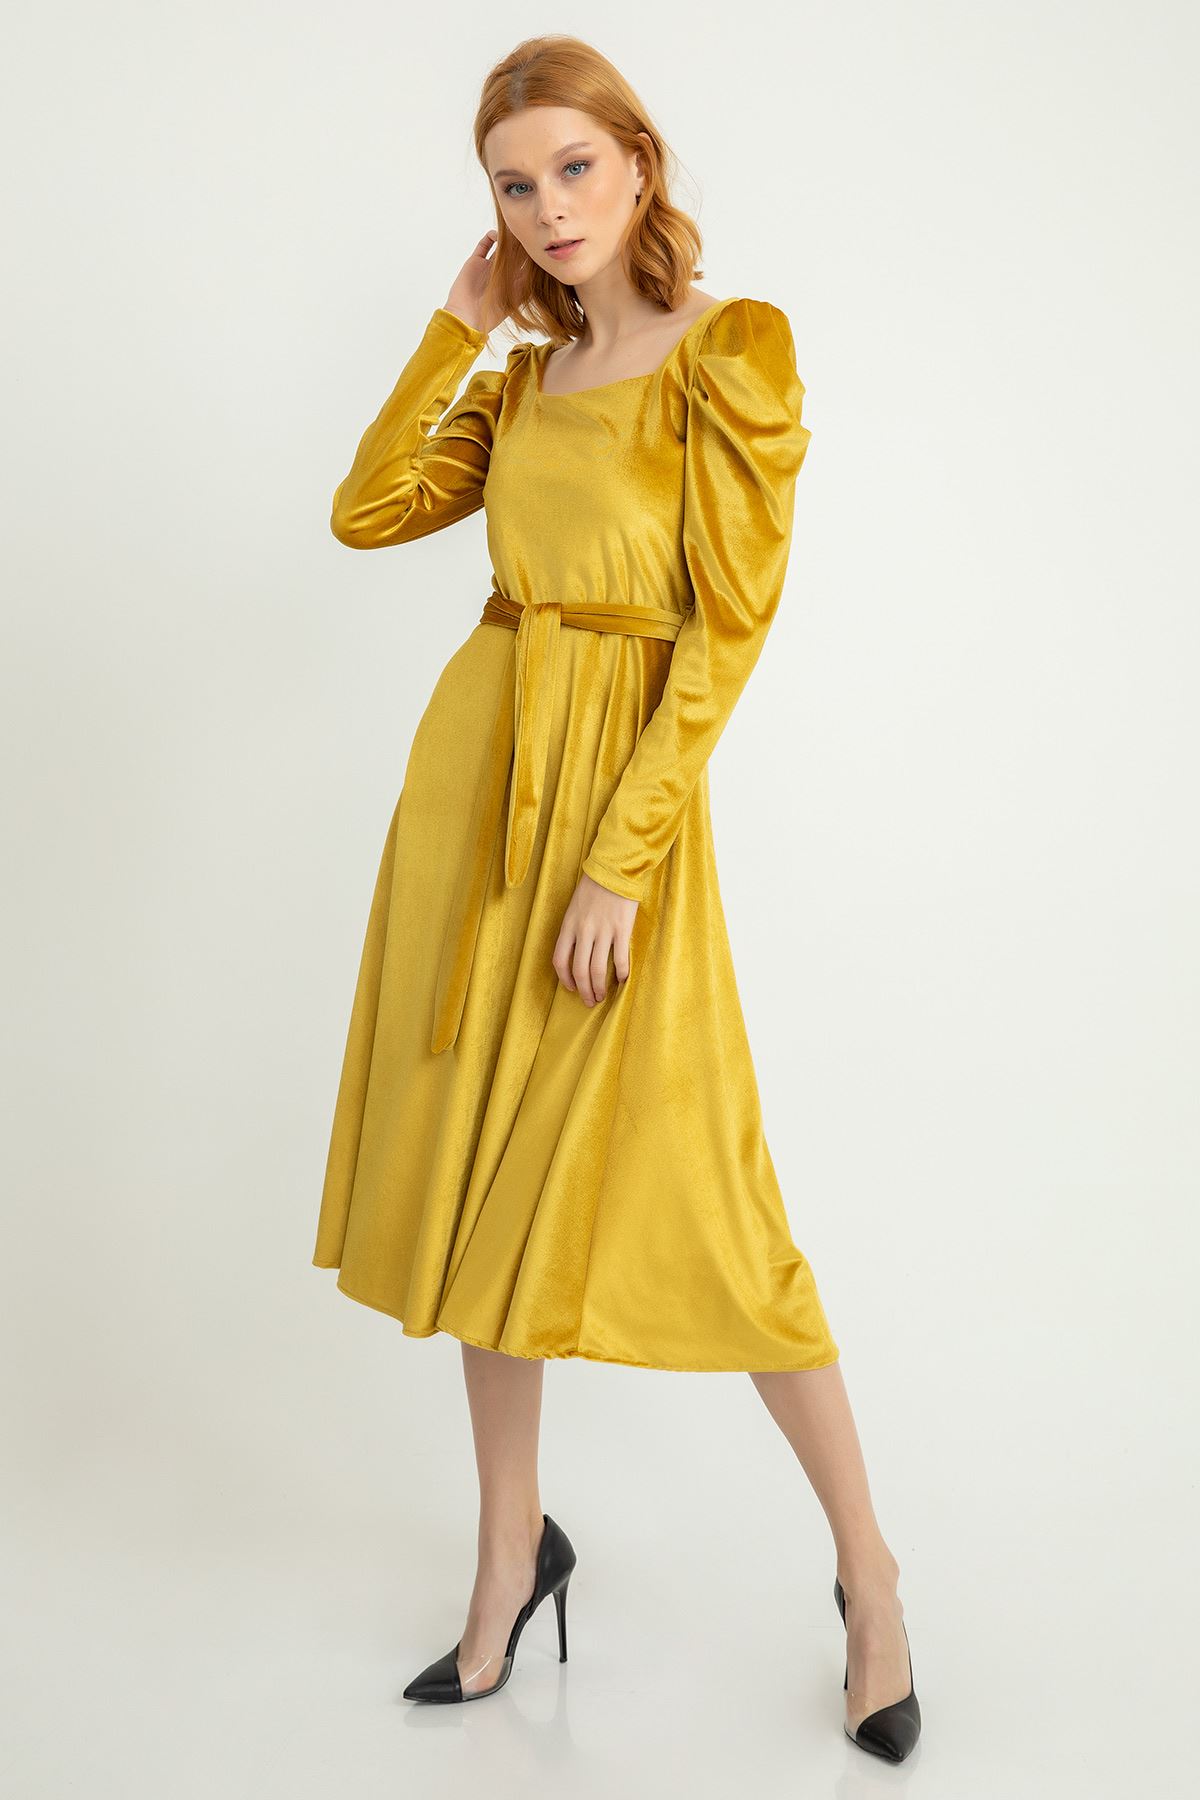 Velvet Fabric Square Collar Watermlon Sleeve Belted Women Dress - Mustard